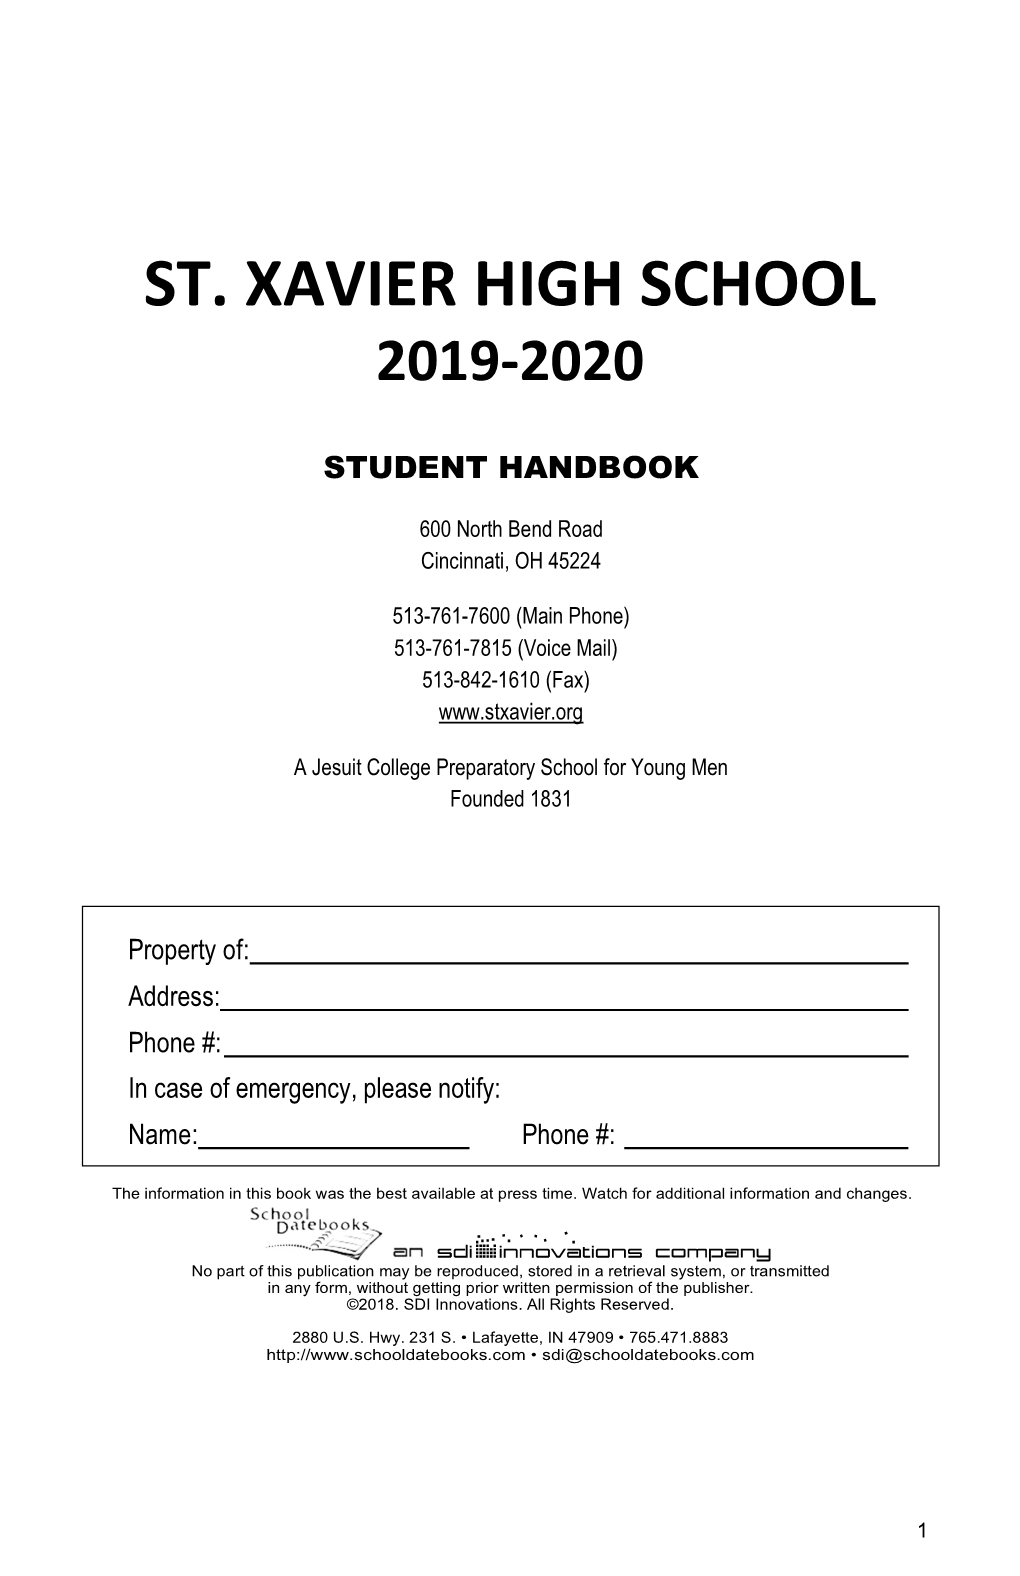 St. Xavier High School 2019-2020